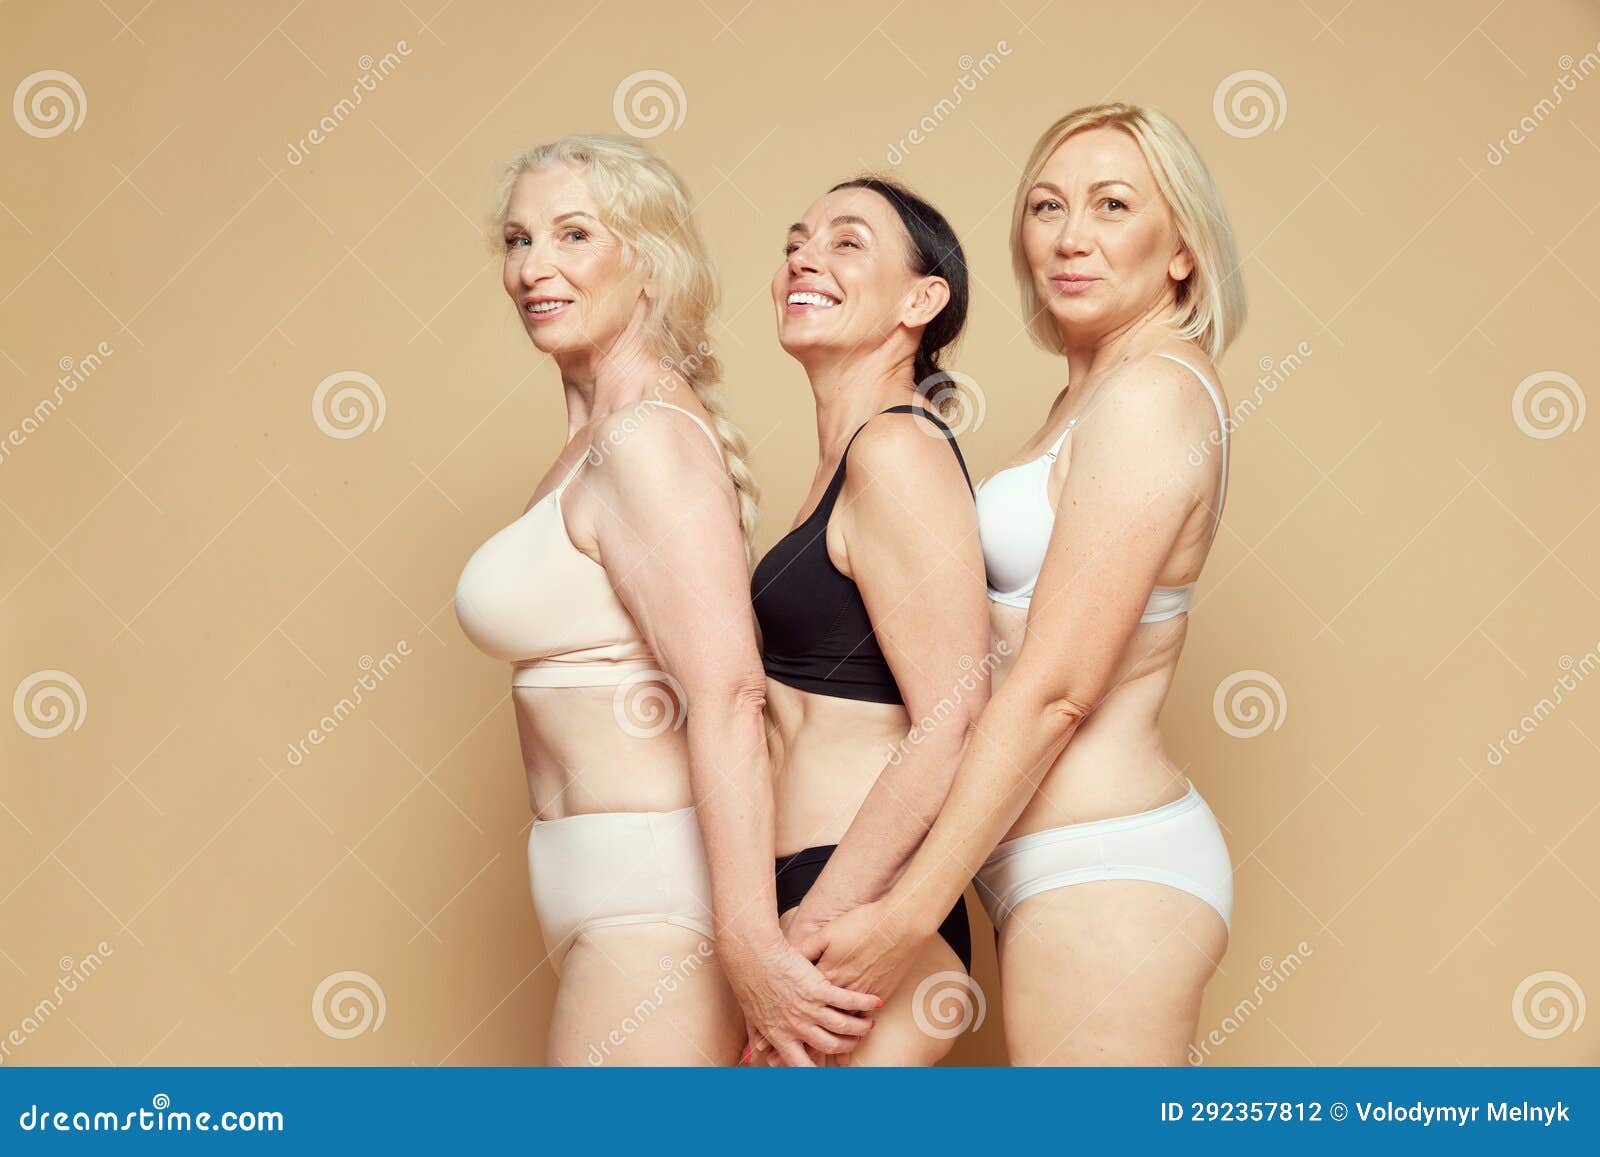 https://thumbs.dreamstime.com/z/side-view-image-elderly-women-underwear-against-beige-studio-background-natural-body-senior-aging-concept-age-beauty-292357812.jpg